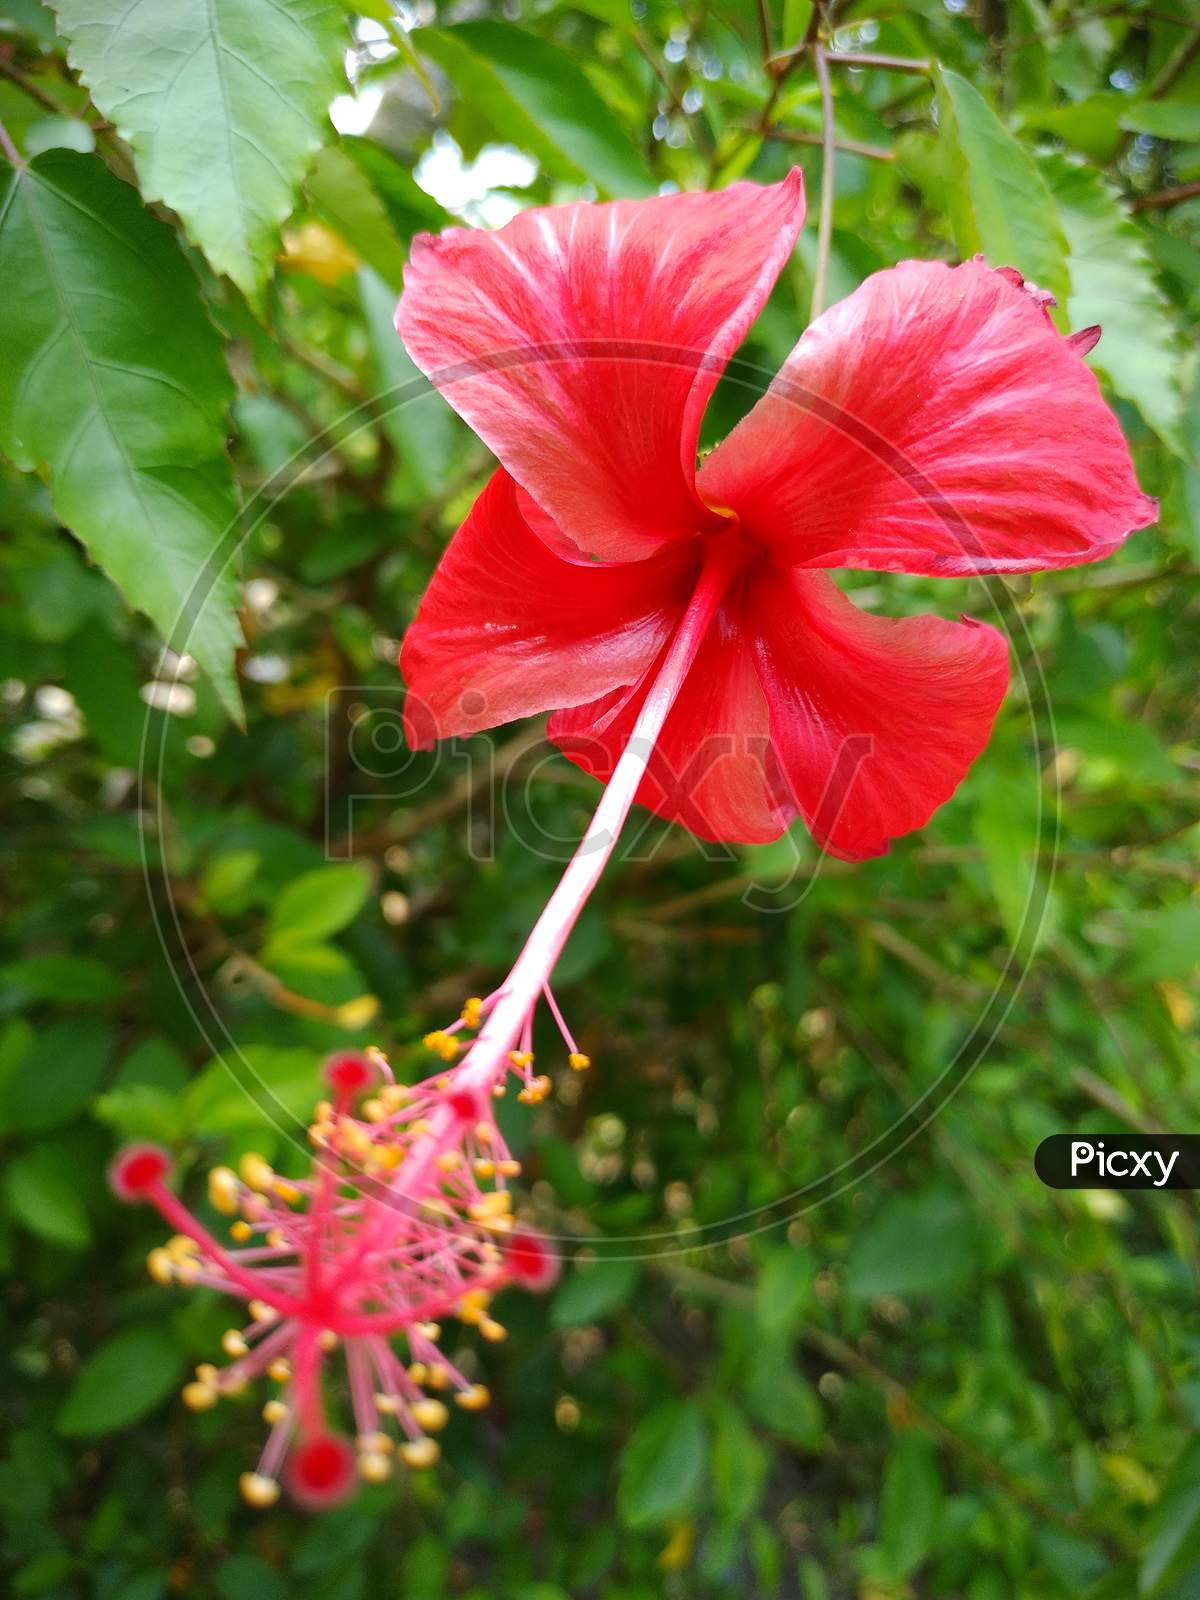 A wild red hibiscus flower.